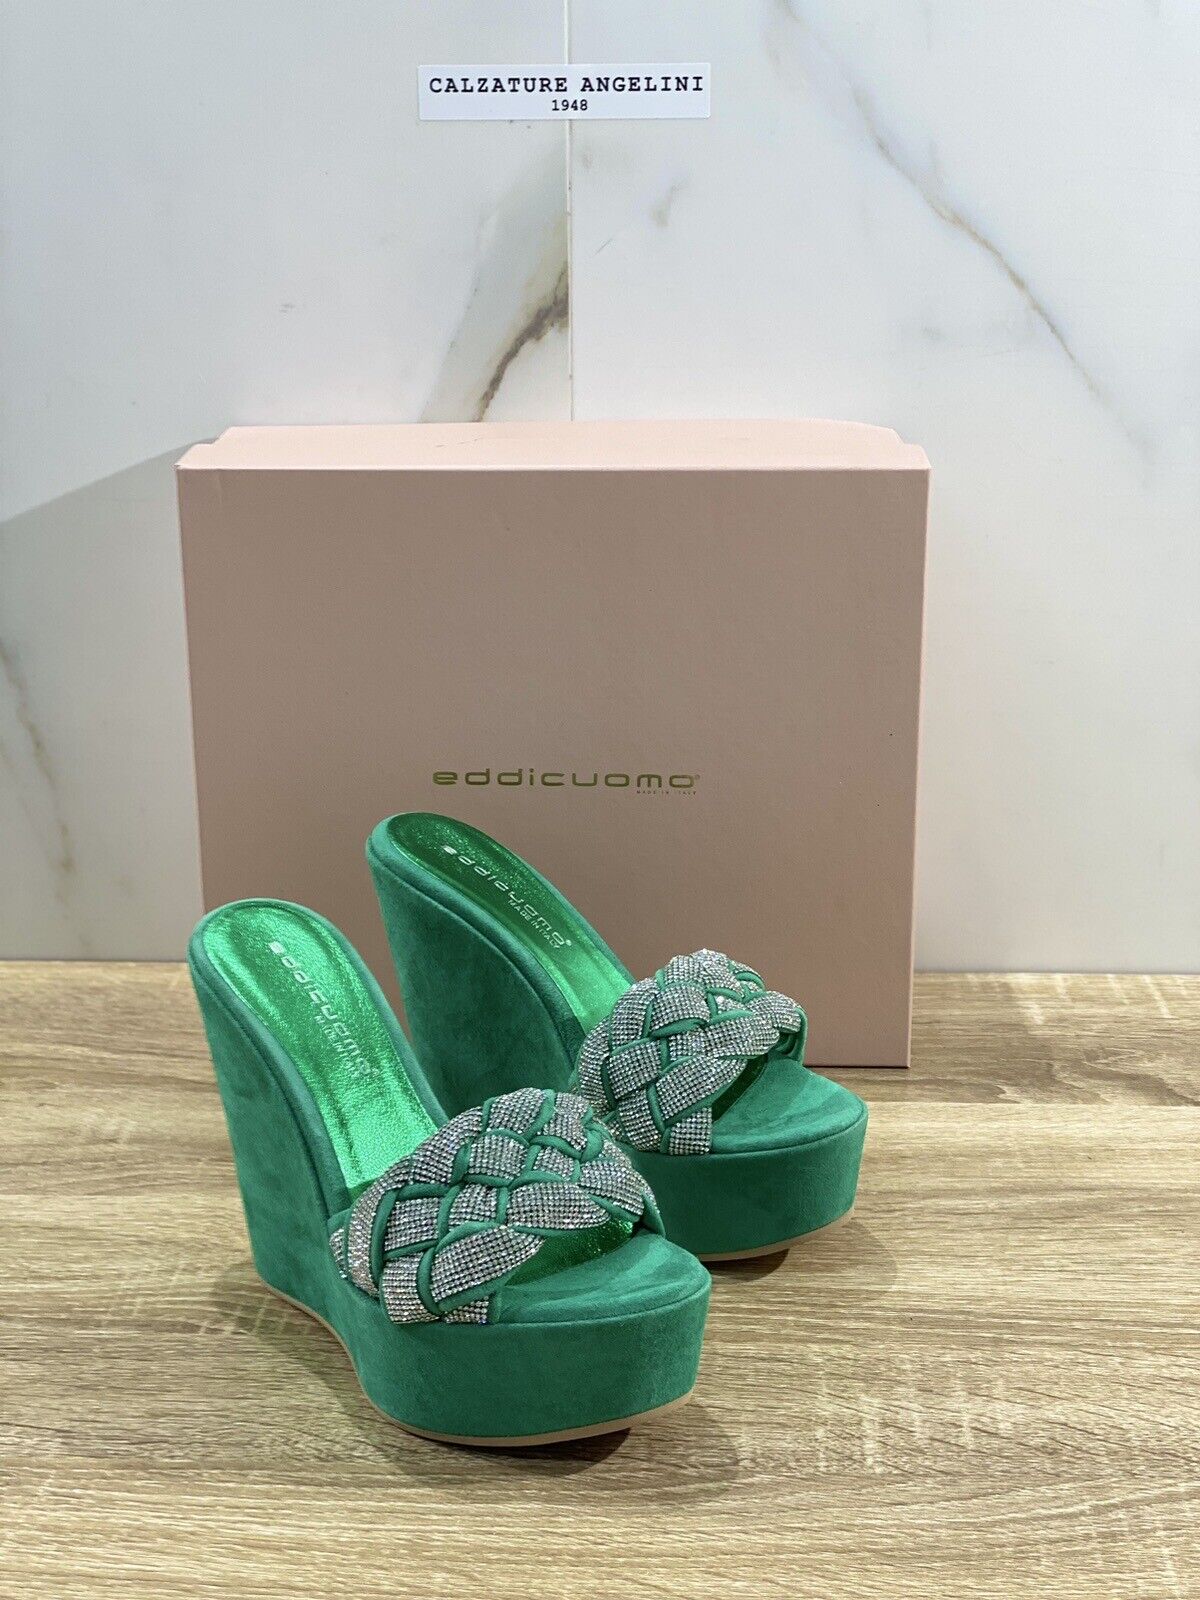 Eddi Cuomo Sandalo Donna Zeppa In Suede Verde Luxury Handmade 36